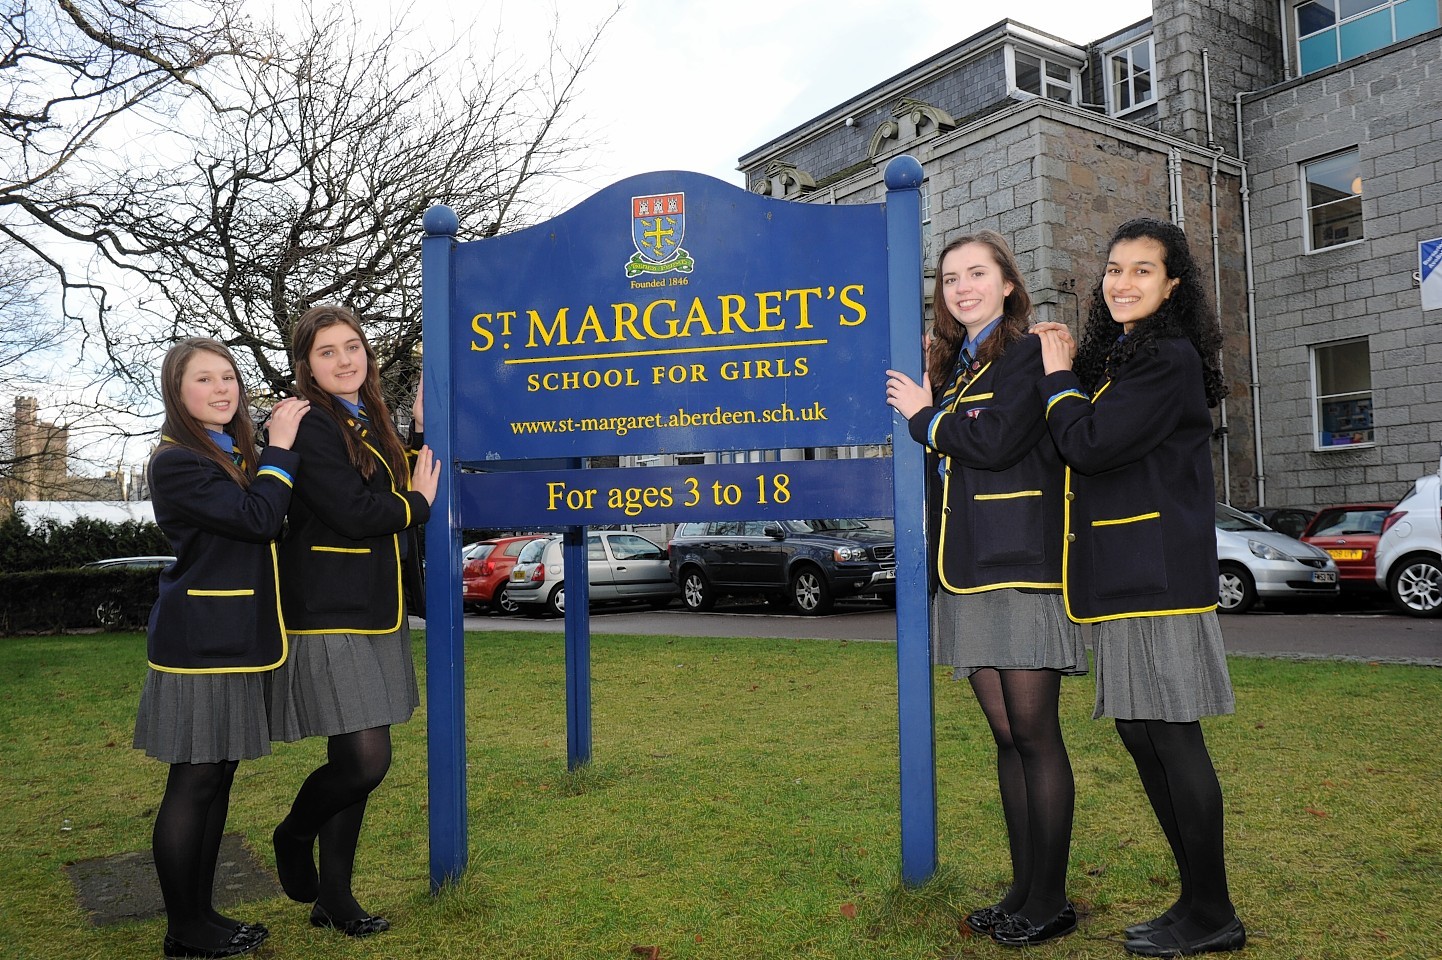 St Margarets School has been praised